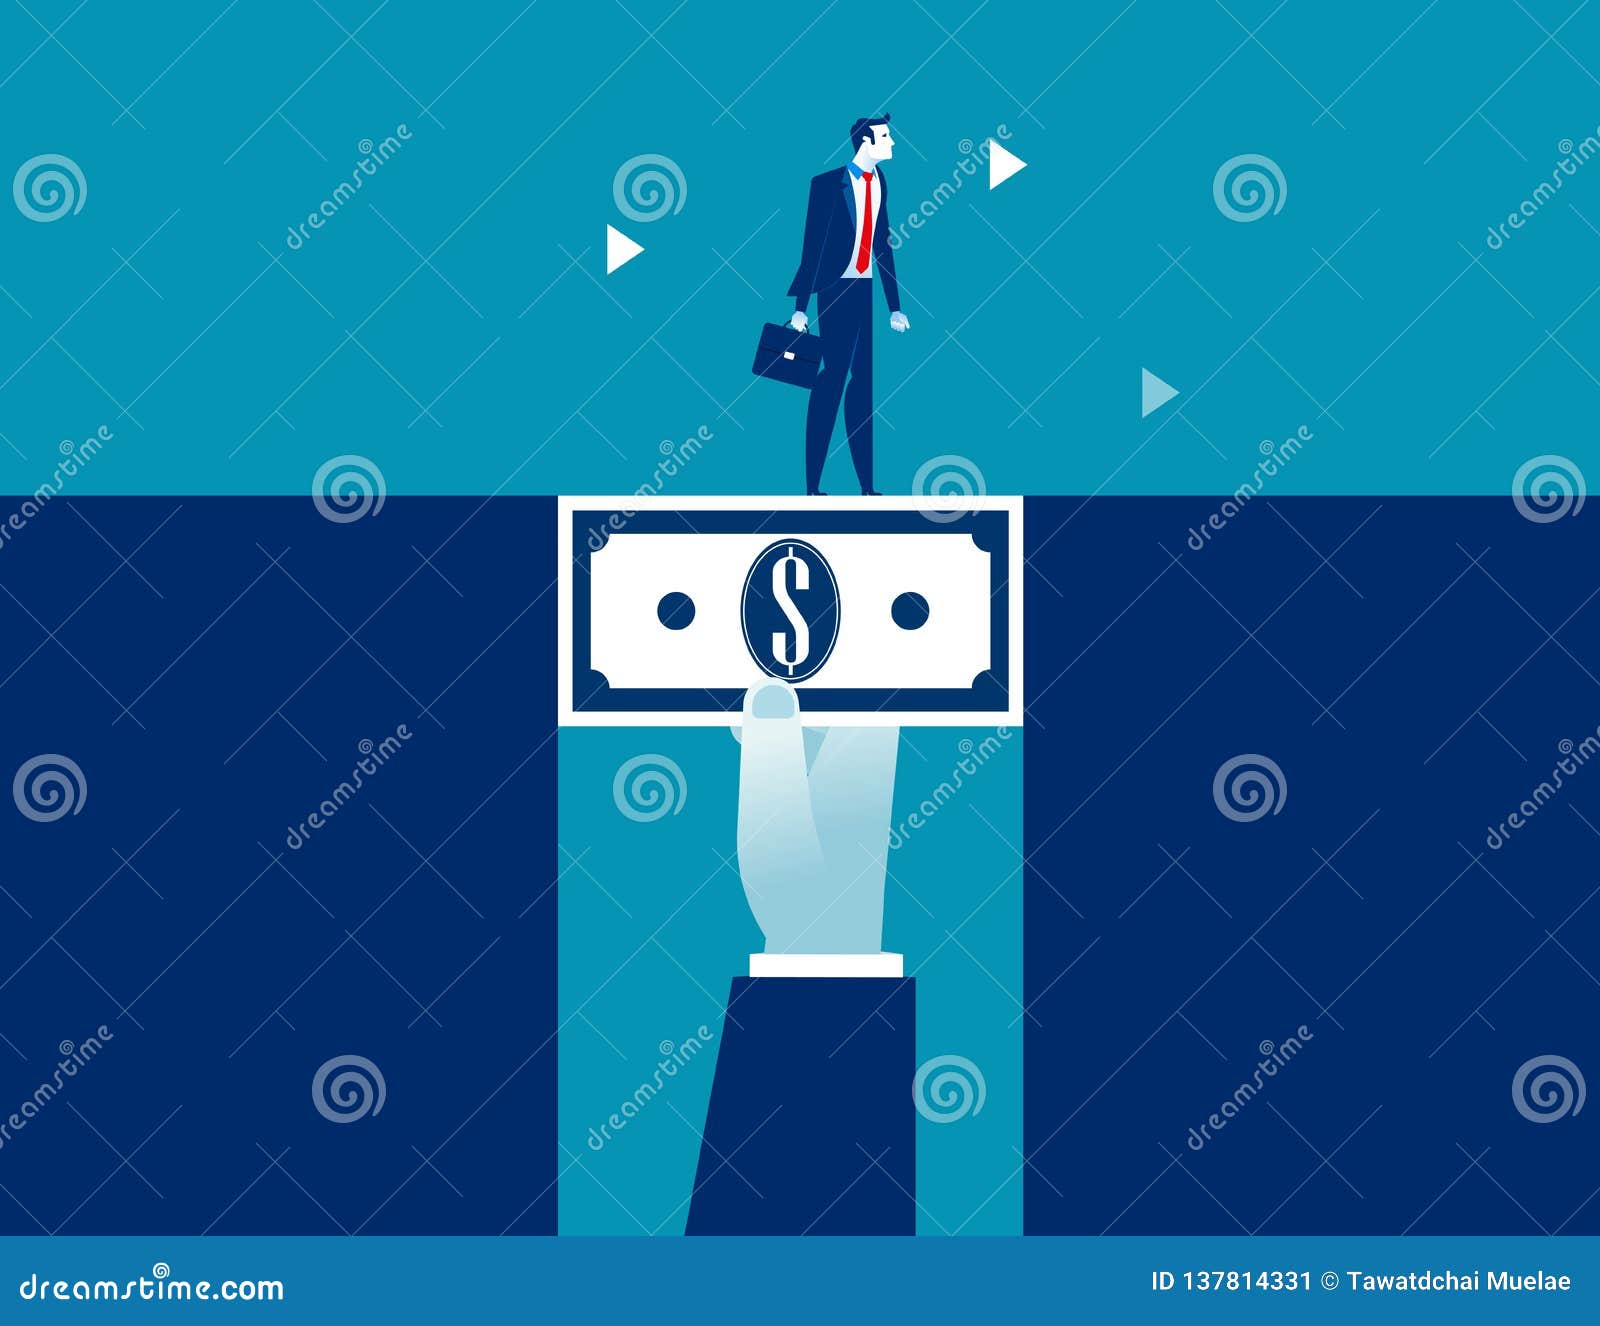 businessman walking across dollar money bridging the gap. concept business  